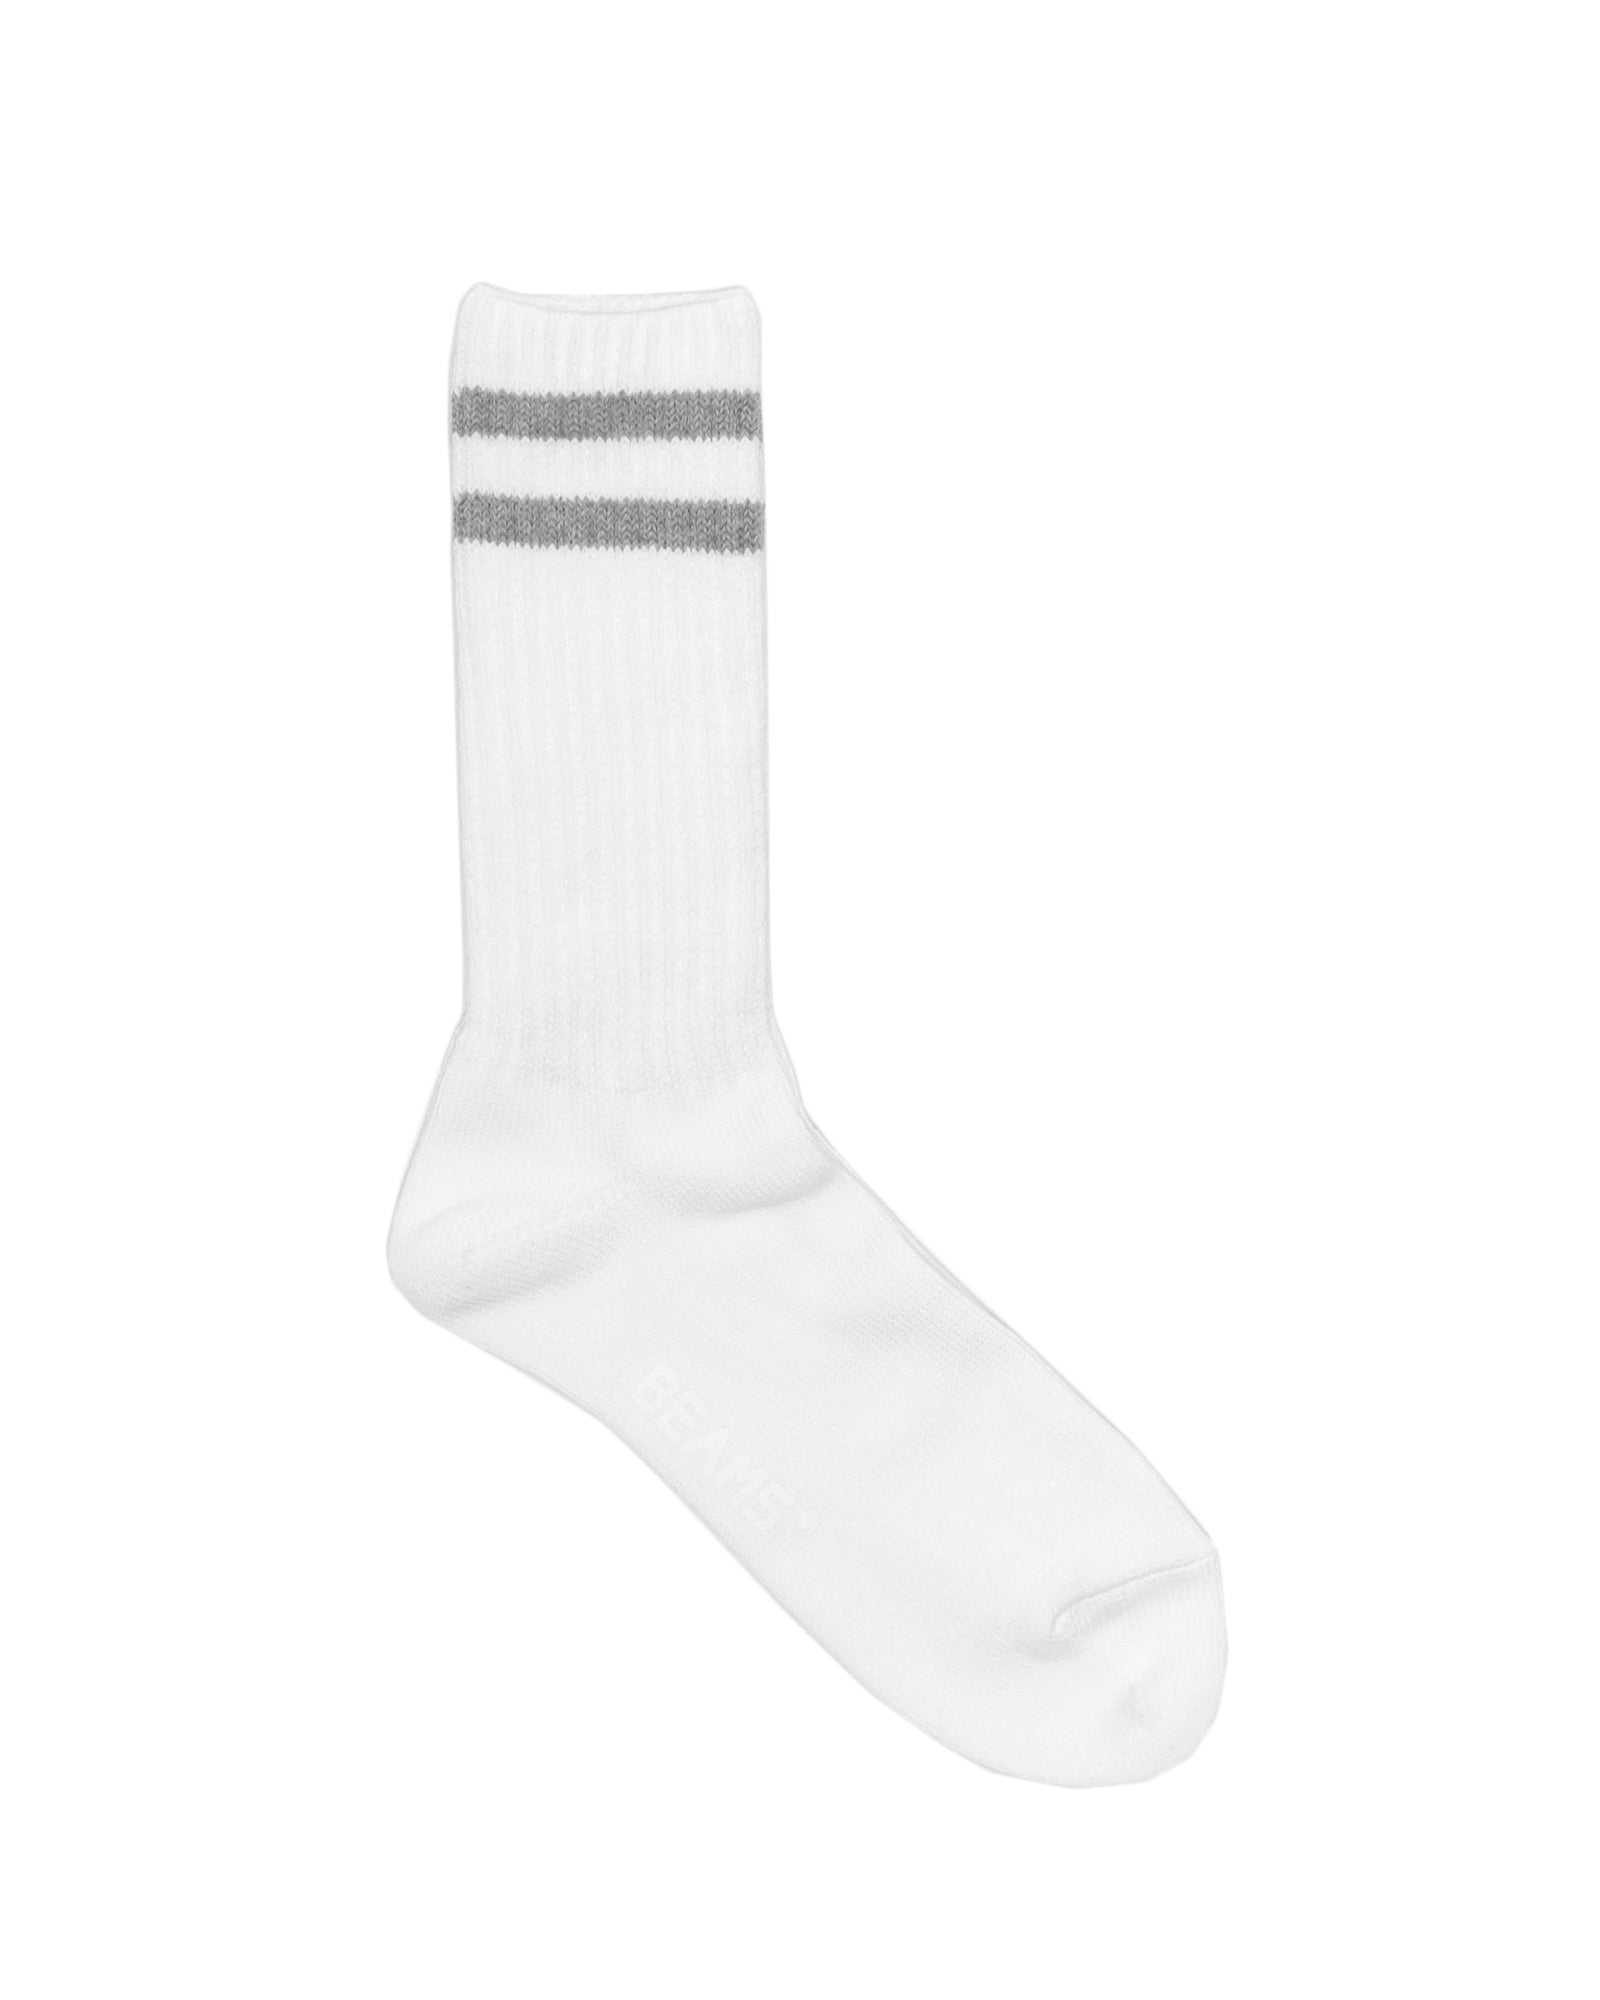 Schoolboy Socks in White/Grey